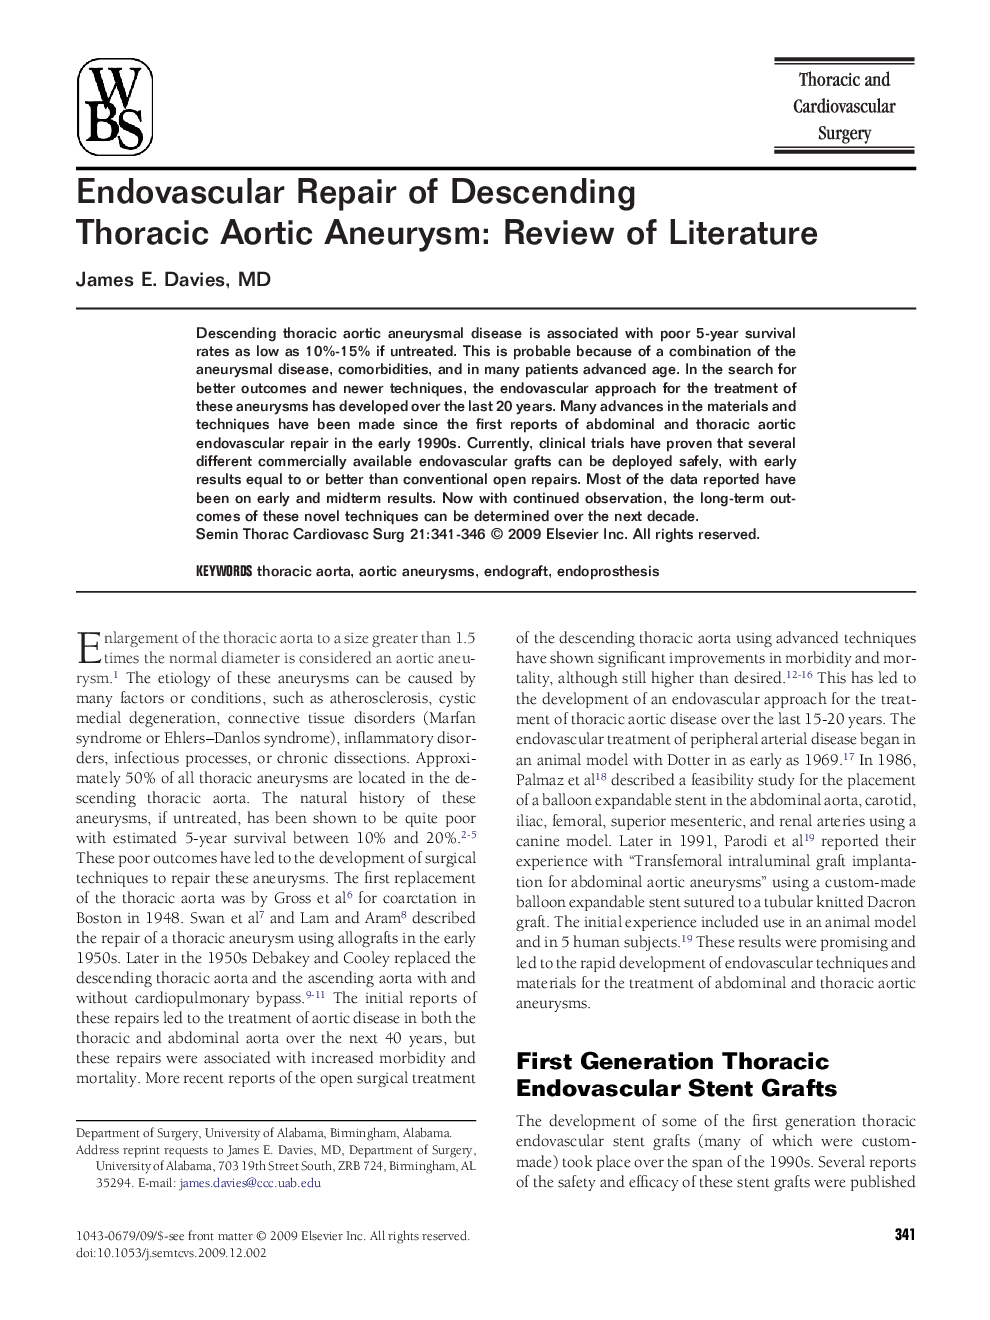 Endovascular Repair of Descending Thoracic Aortic Aneurysm: Review of Literature